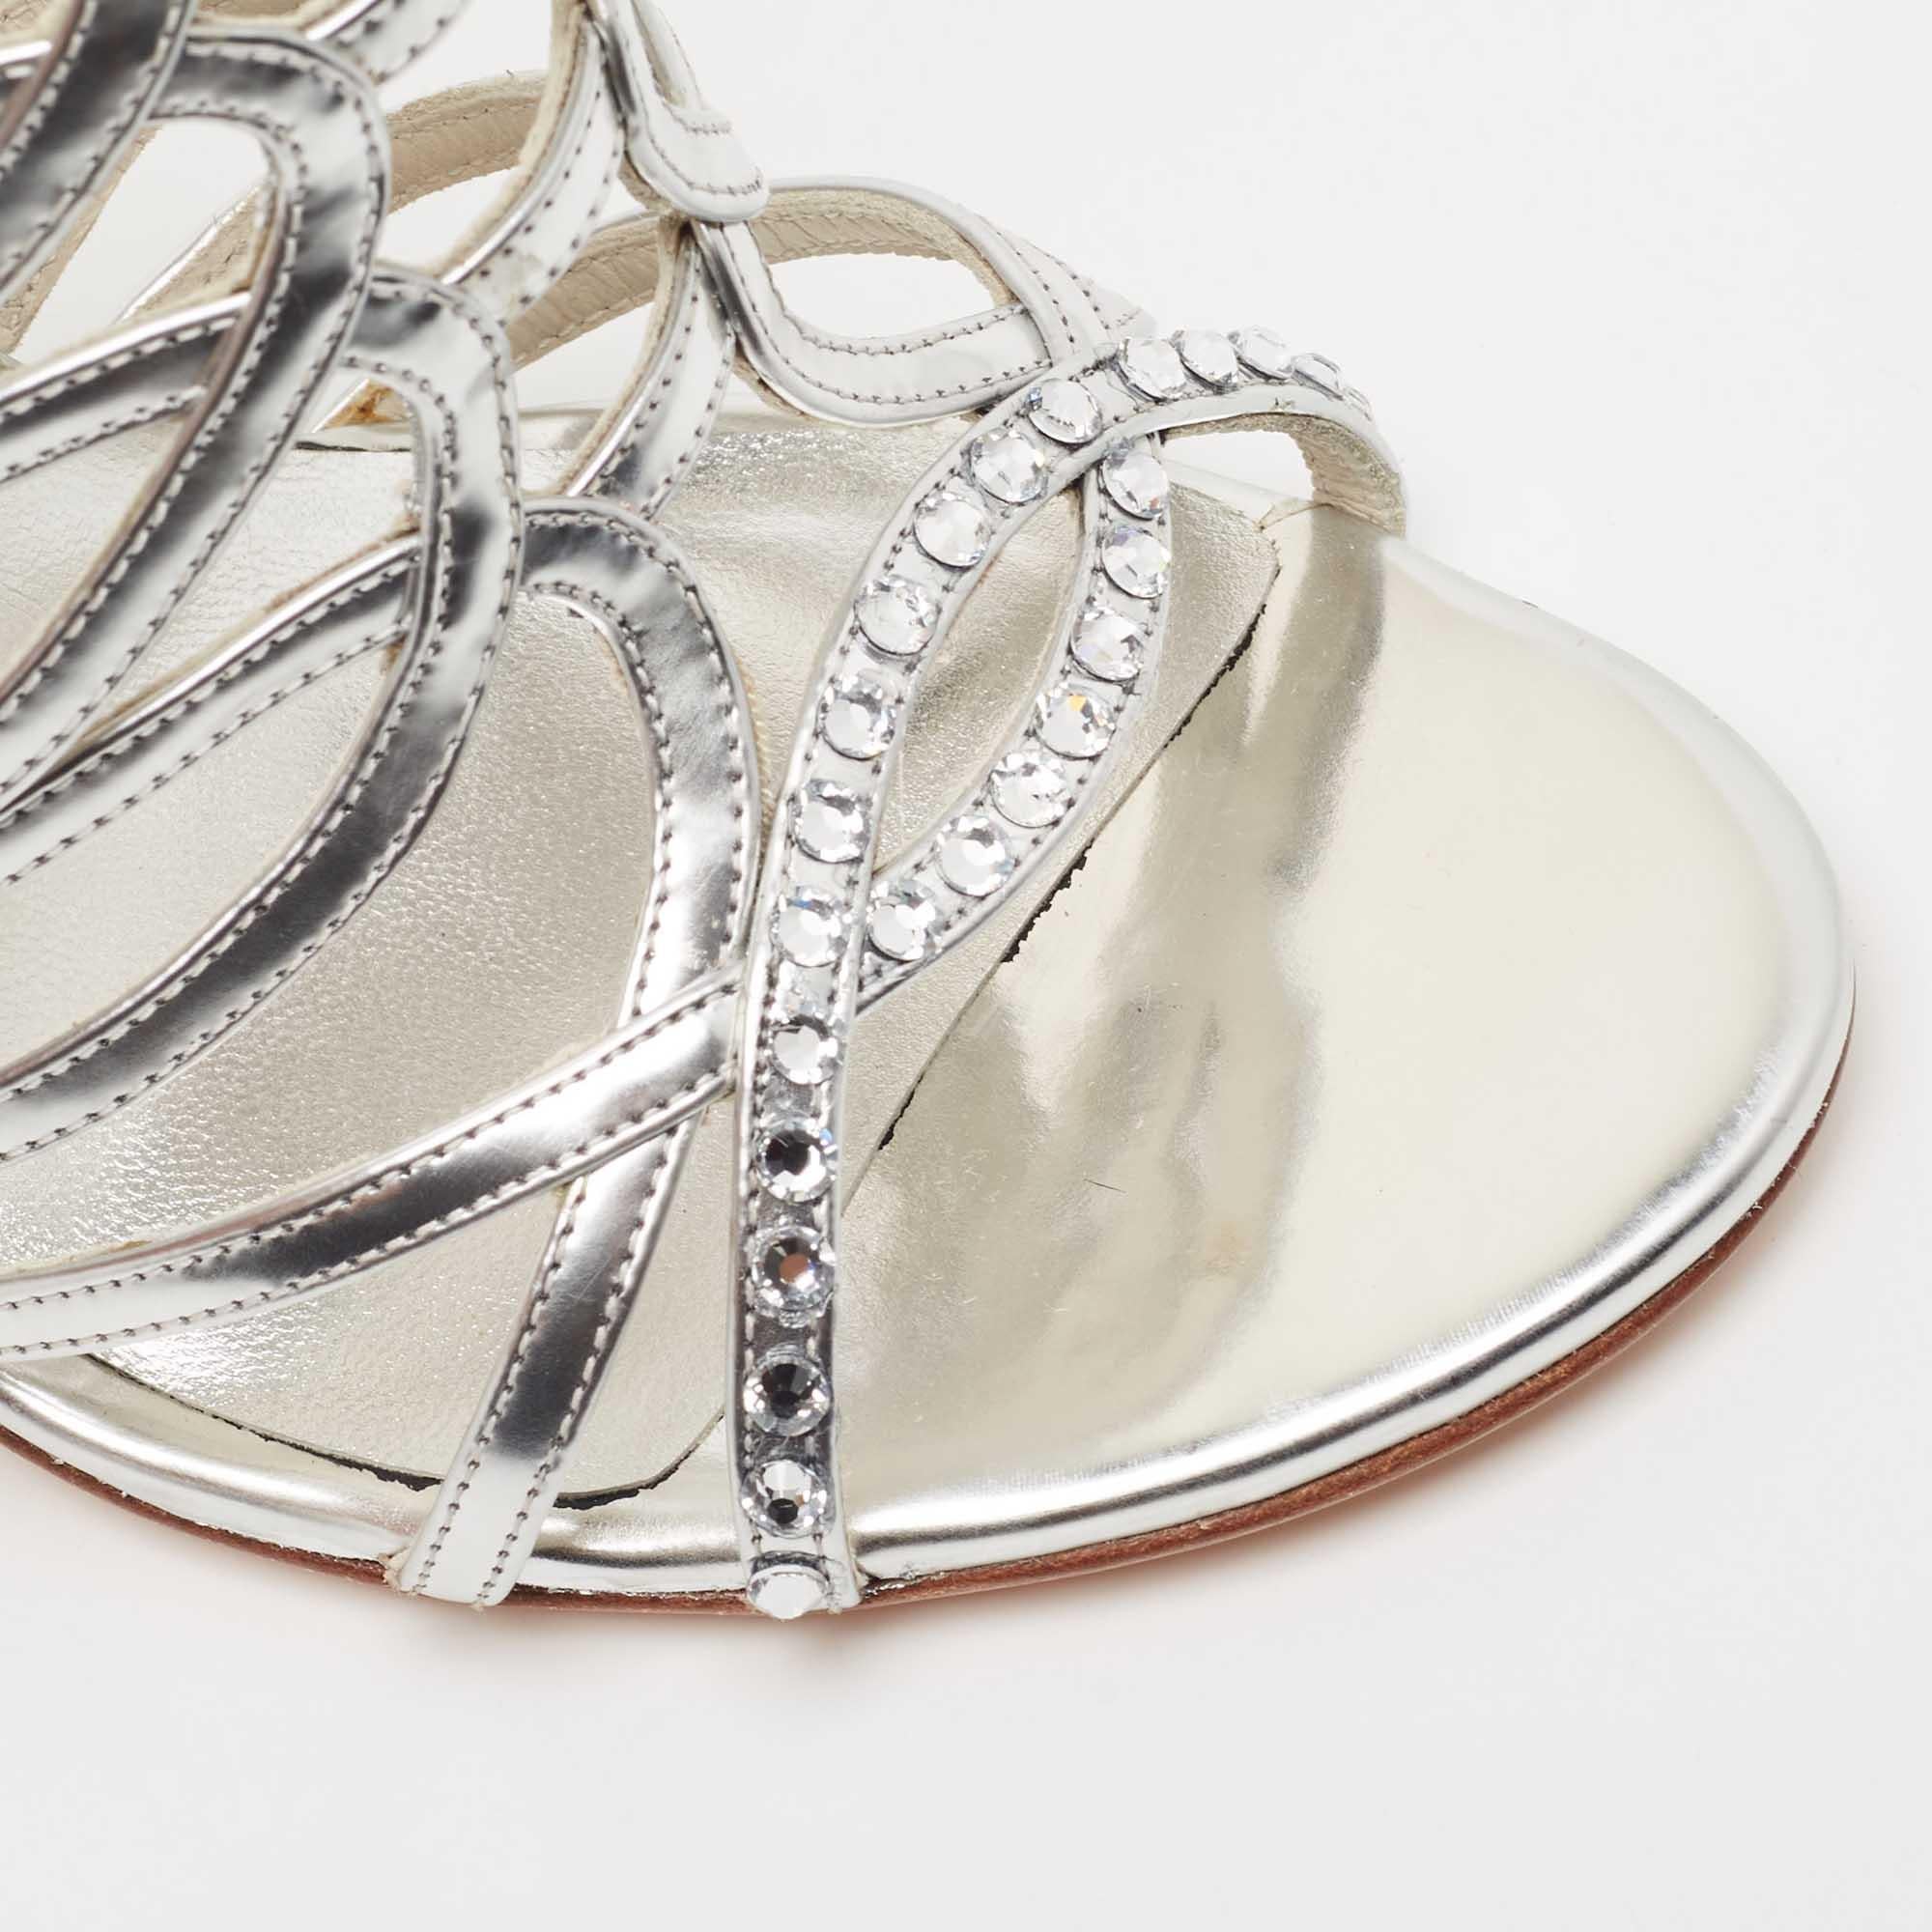 Stuart Weitzman Leather Crystal Embellished Strappy Sandals Size 39.5 2